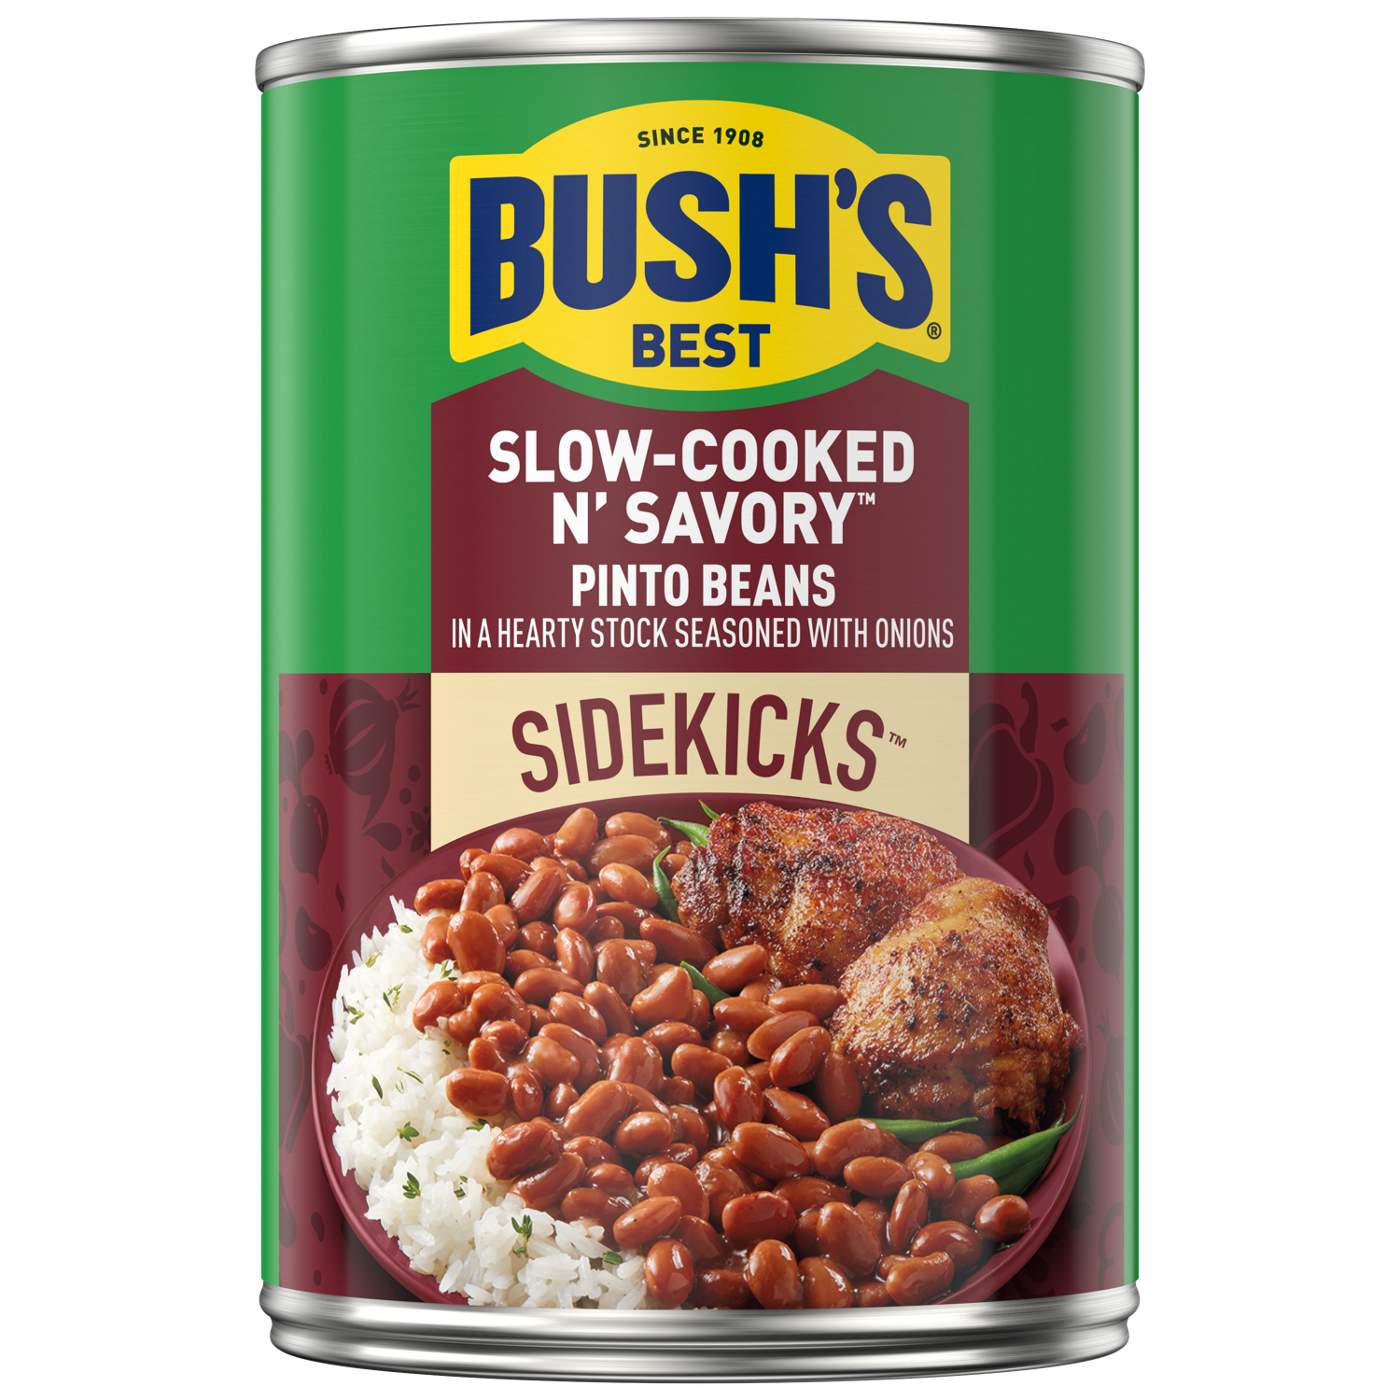 Bush's Best Sidekicks Slow-Cooked n' Savory Pinto Beans; image 1 of 3